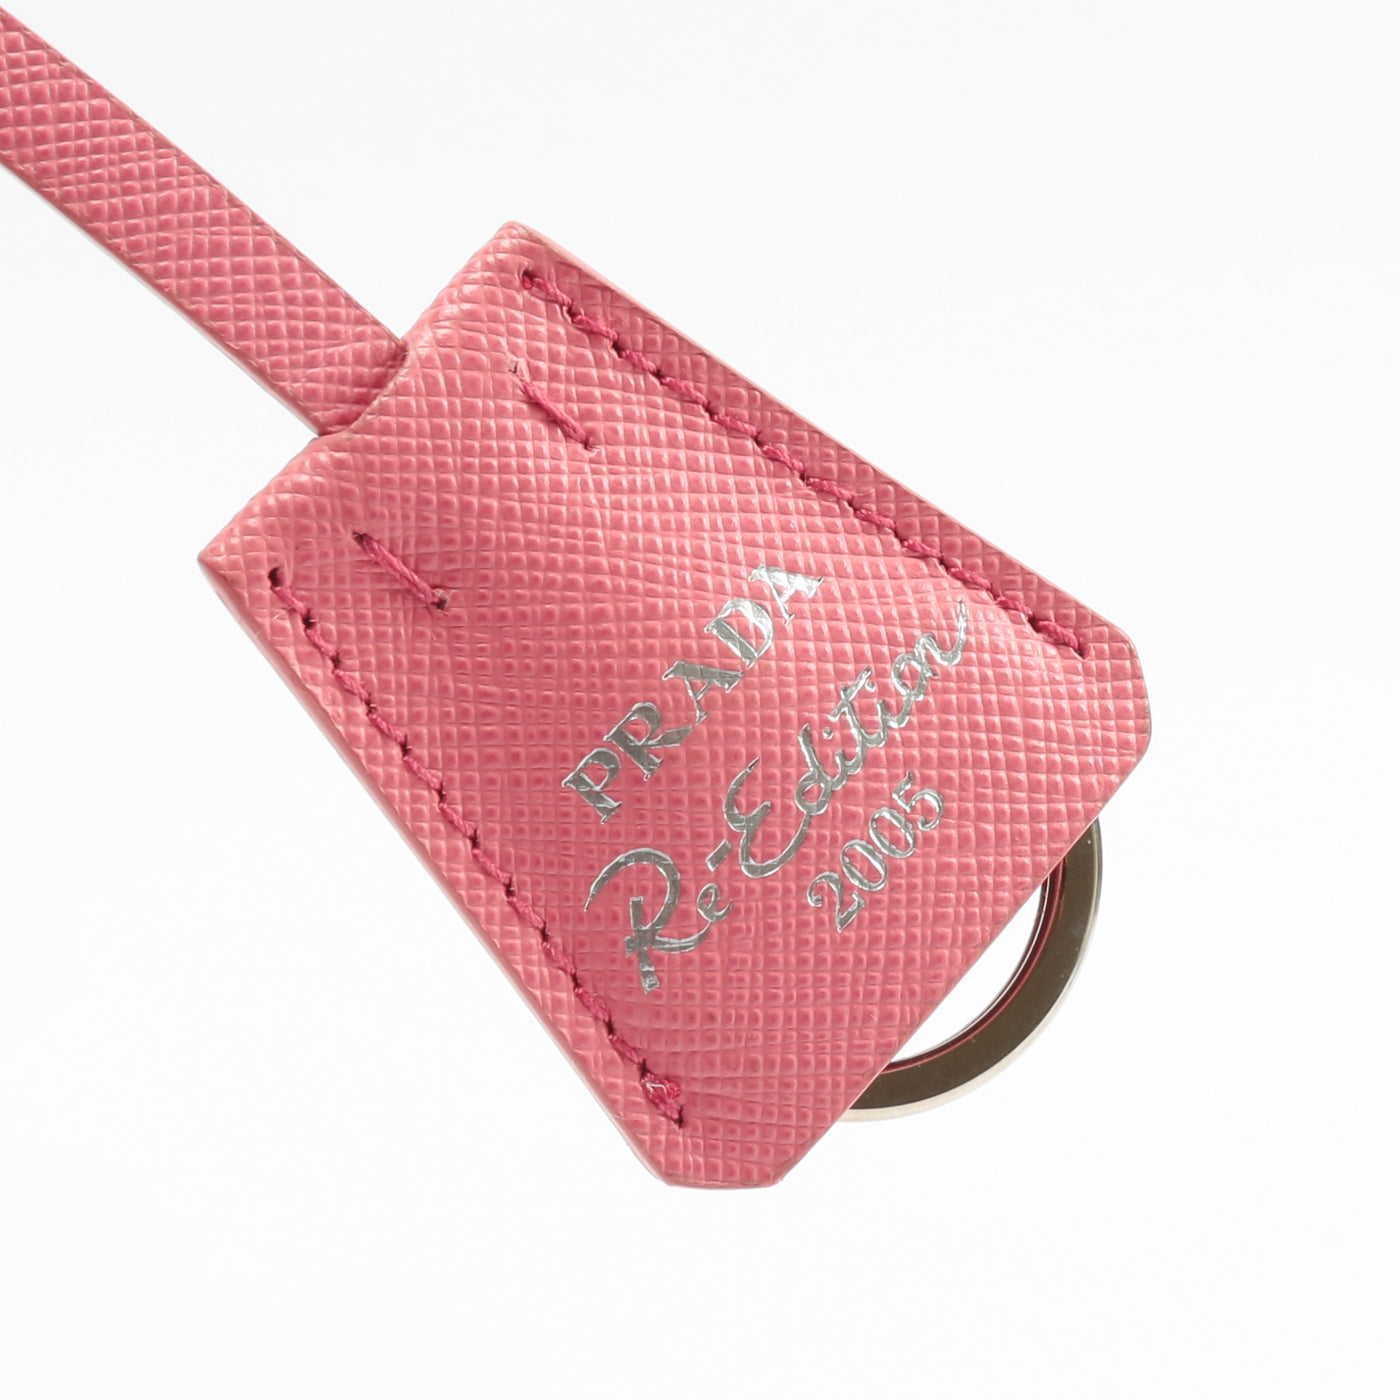 Prada, Bags, Prada Reedition 205 Begonia Pink Nylon Crossbody Bag